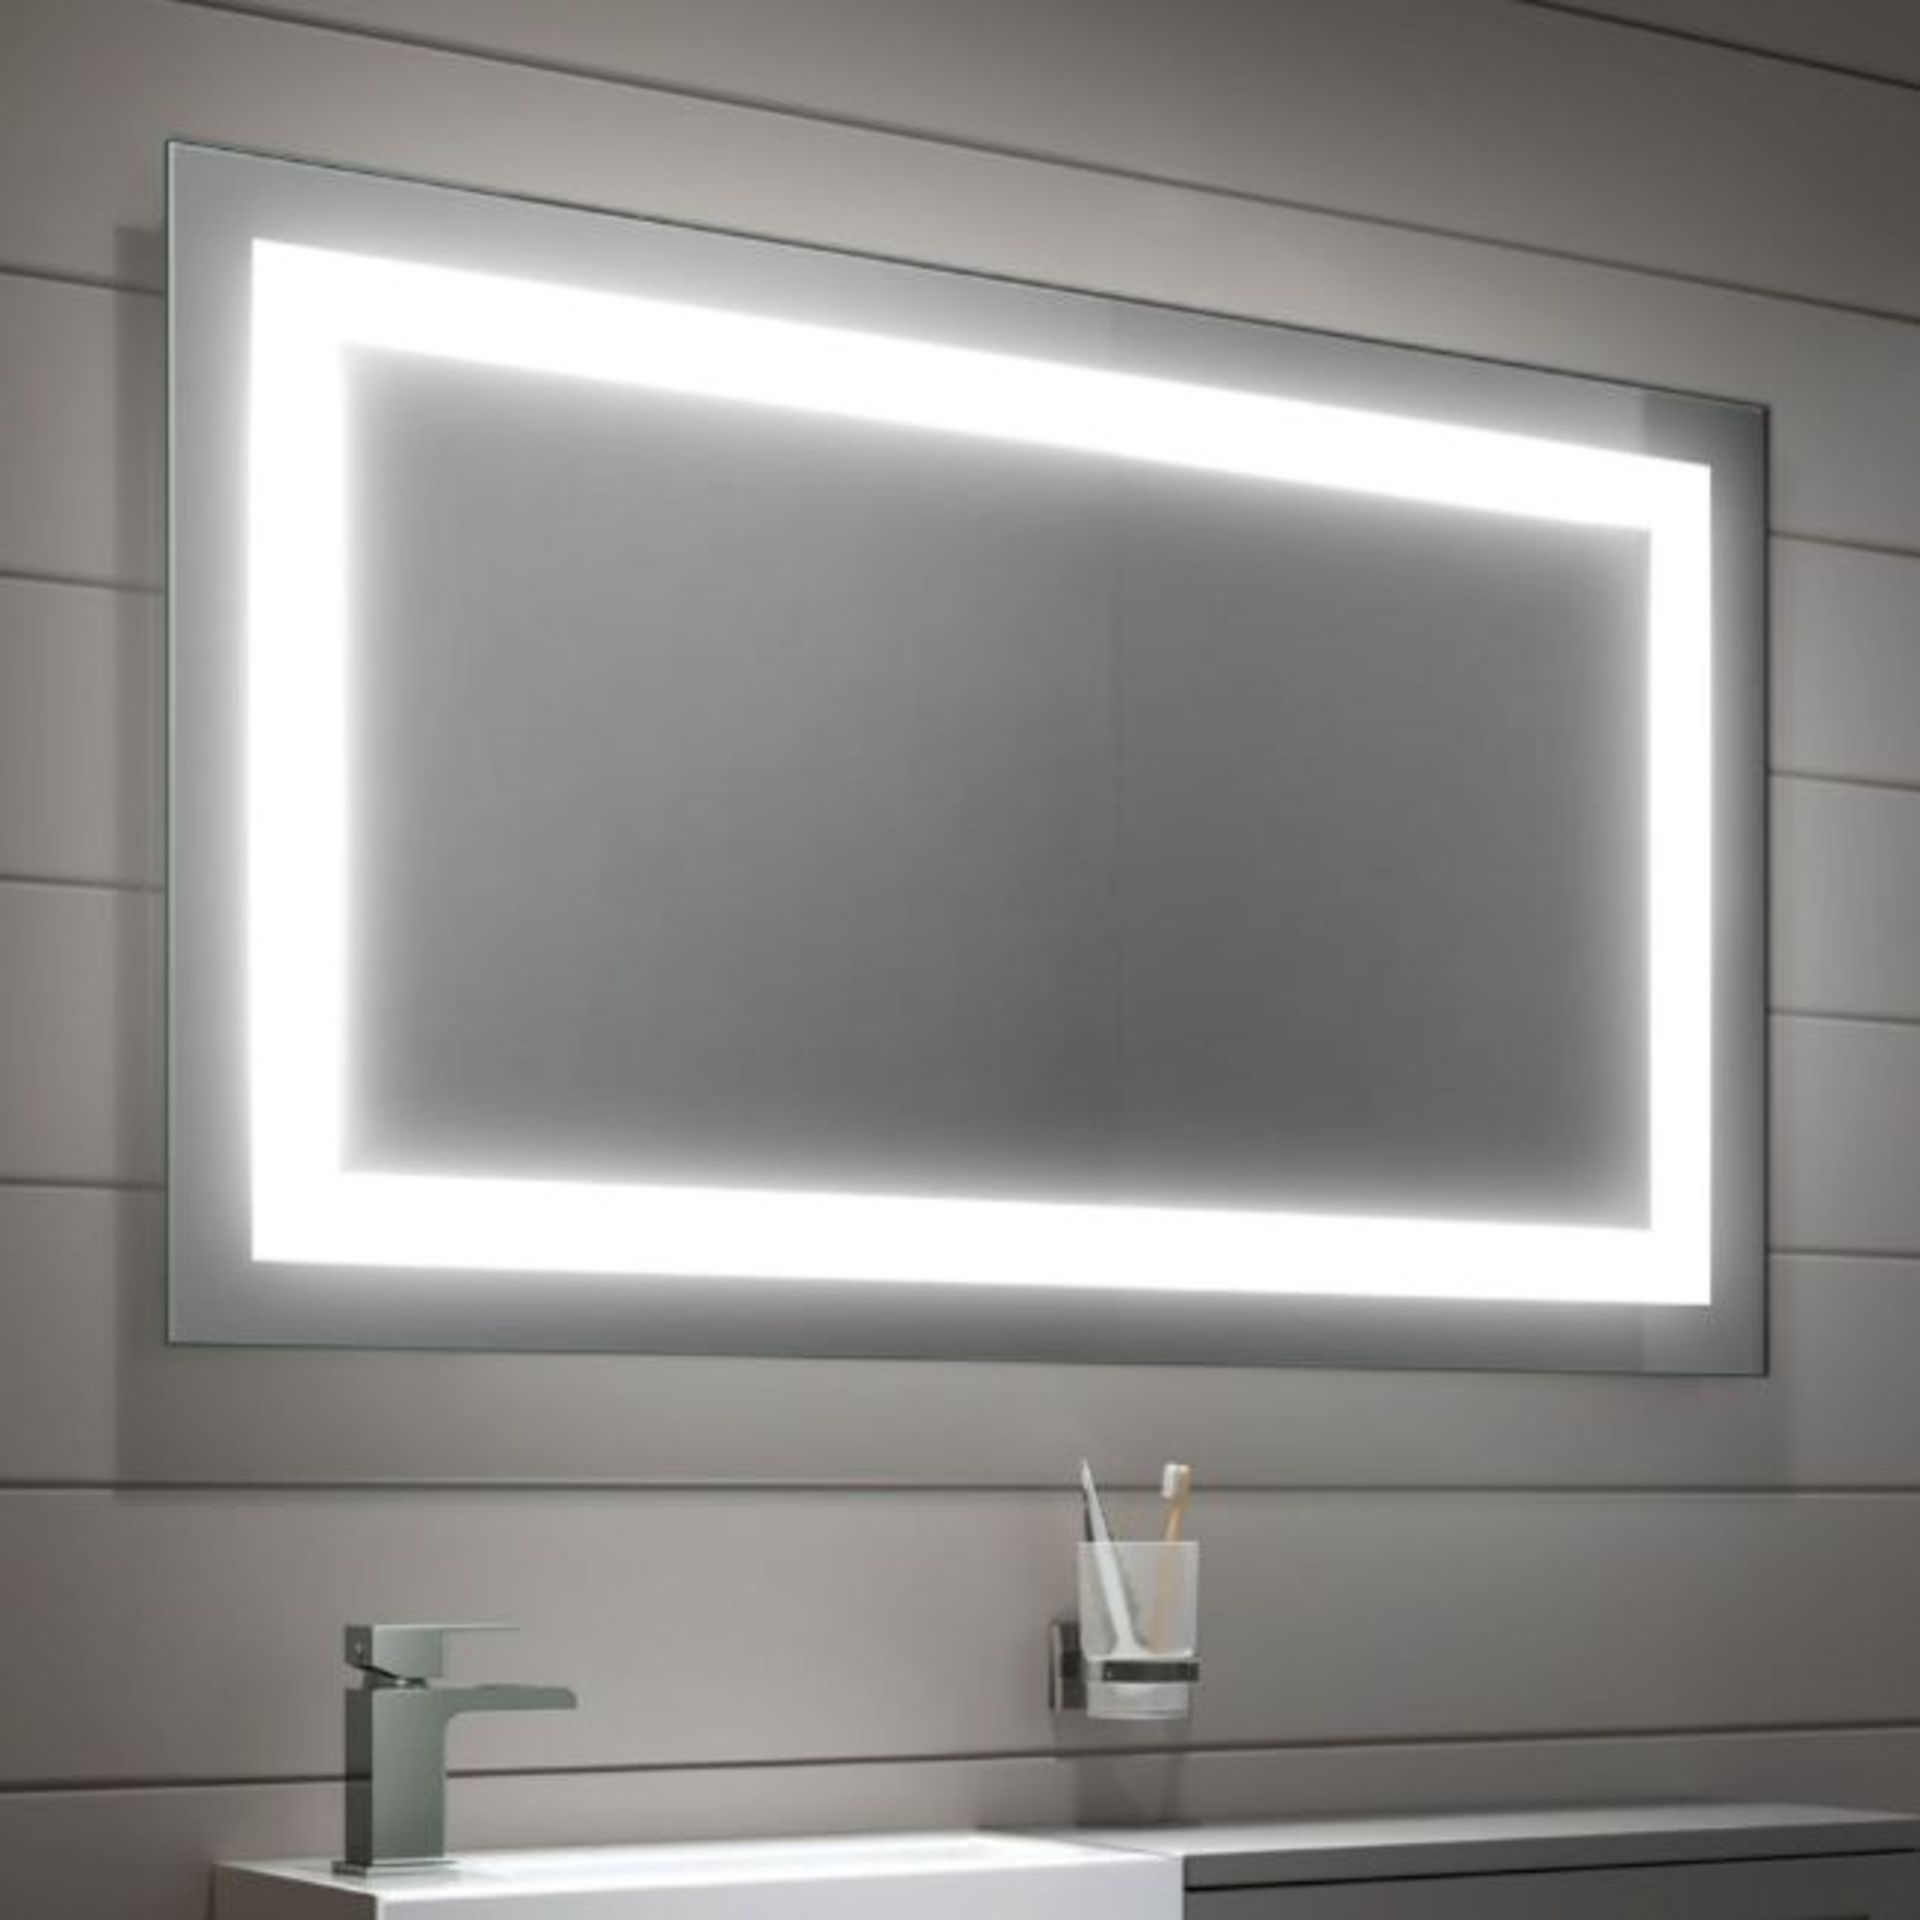 New 600x1000 Nova Illuminated LED Mirror. RRP £499.99. Ml7006.We Love This Mirror As It Provi...